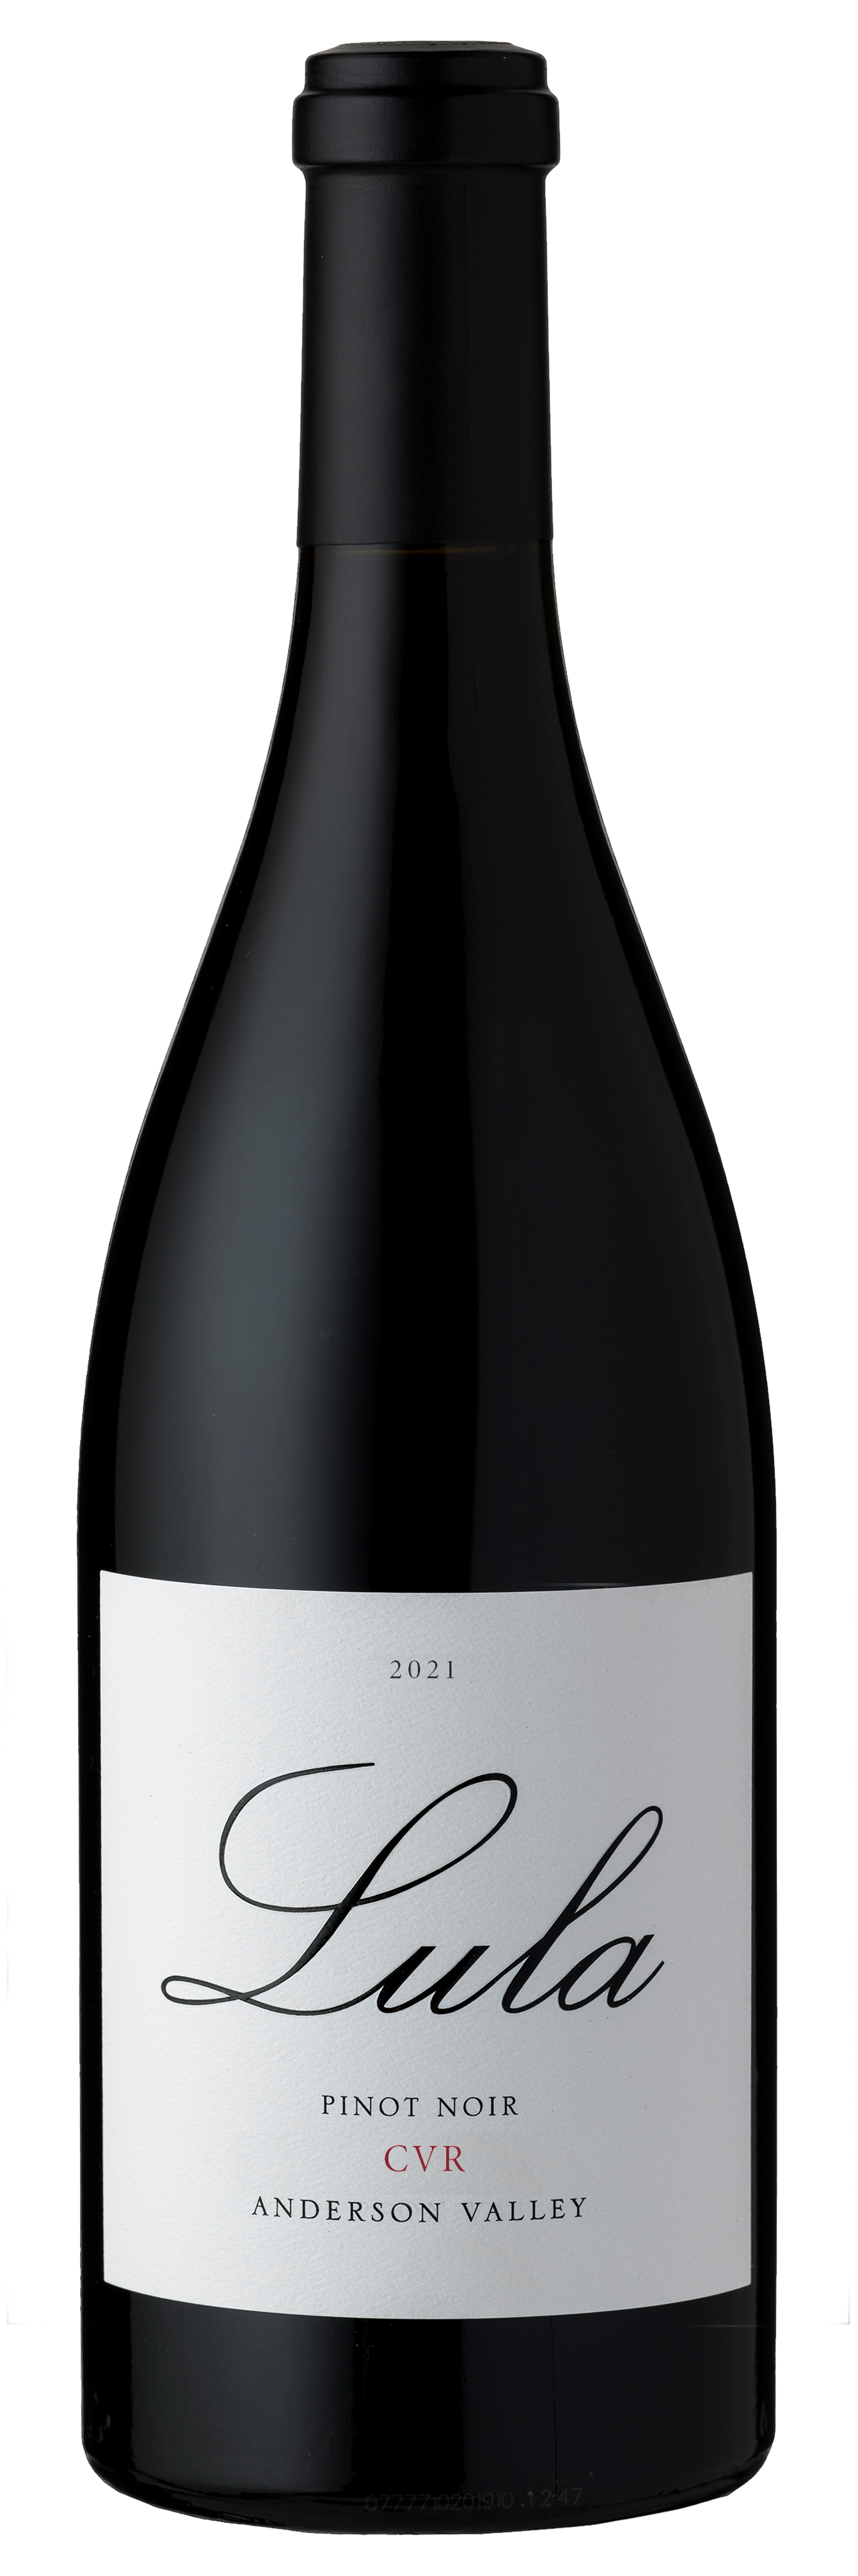 Product Image for 2021 CVR Pinot Noir